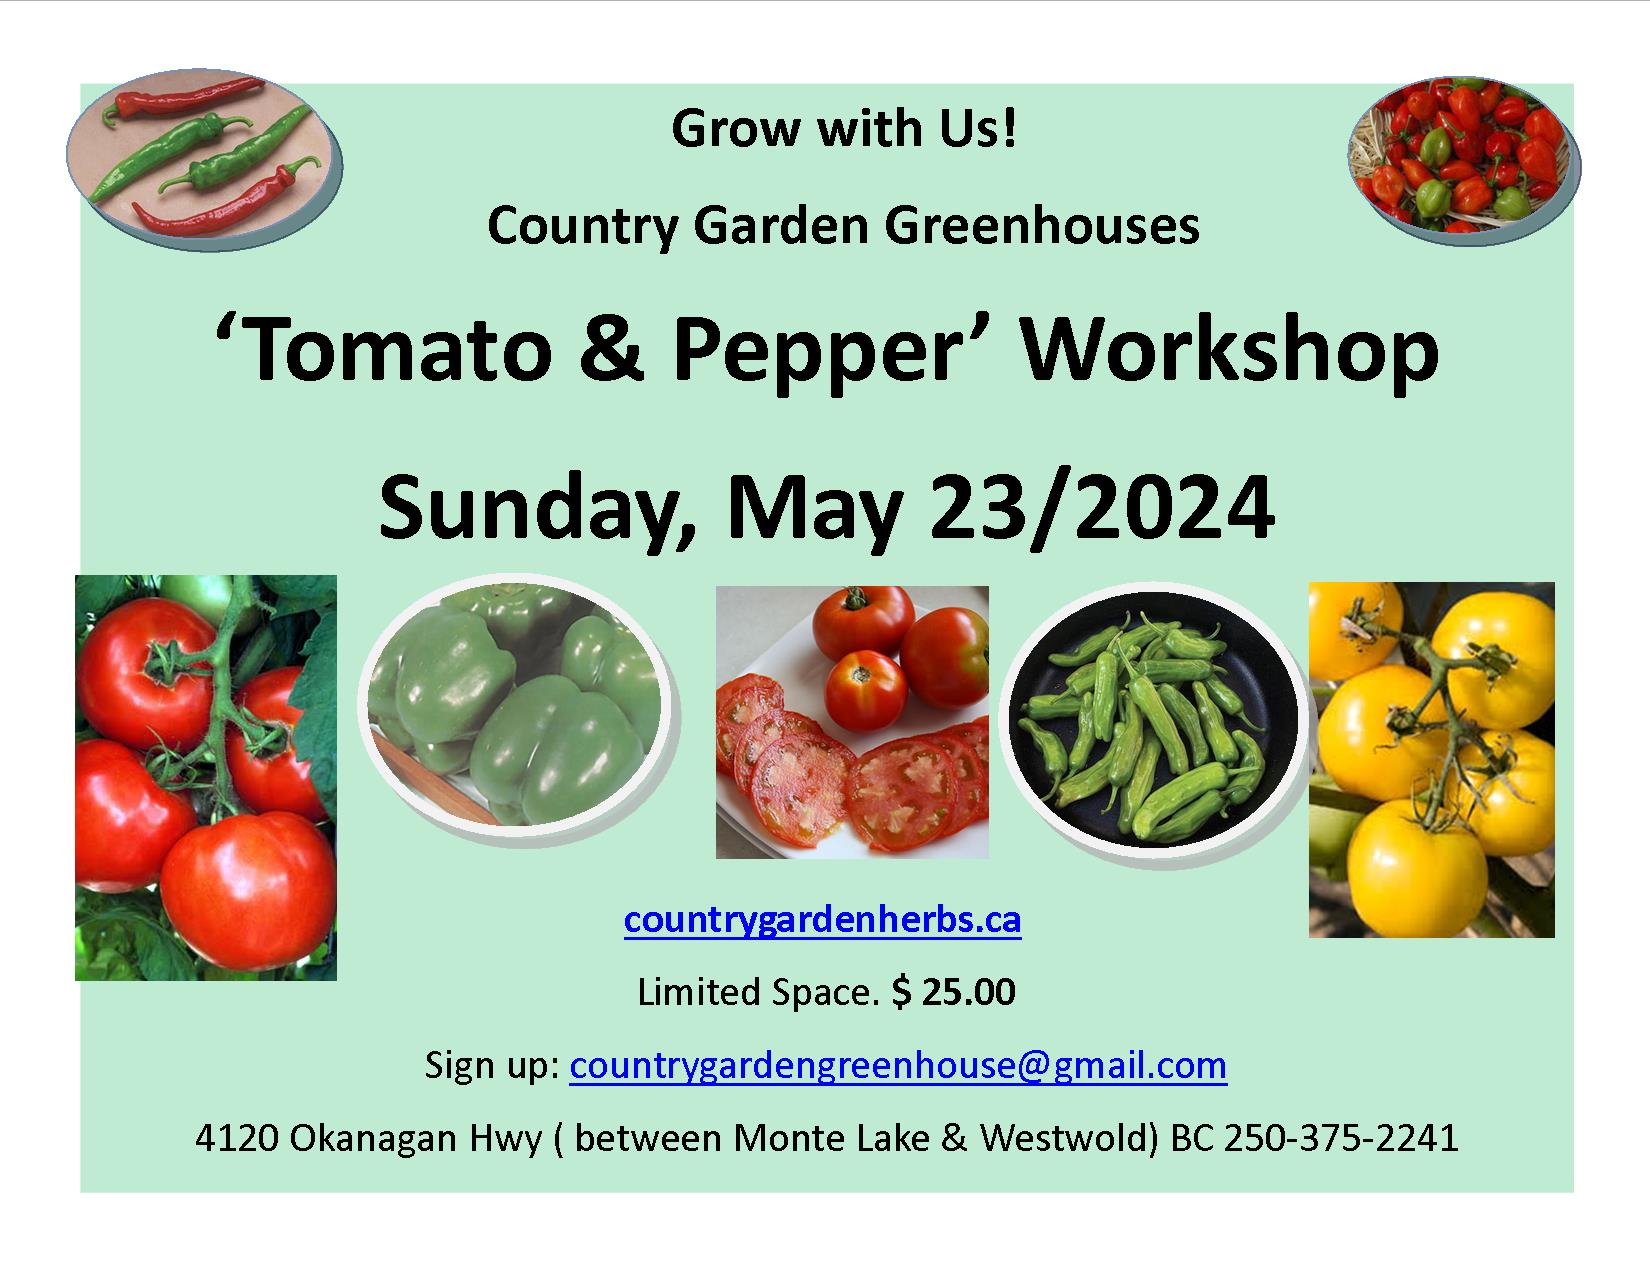 Tomato & Pepper workshop